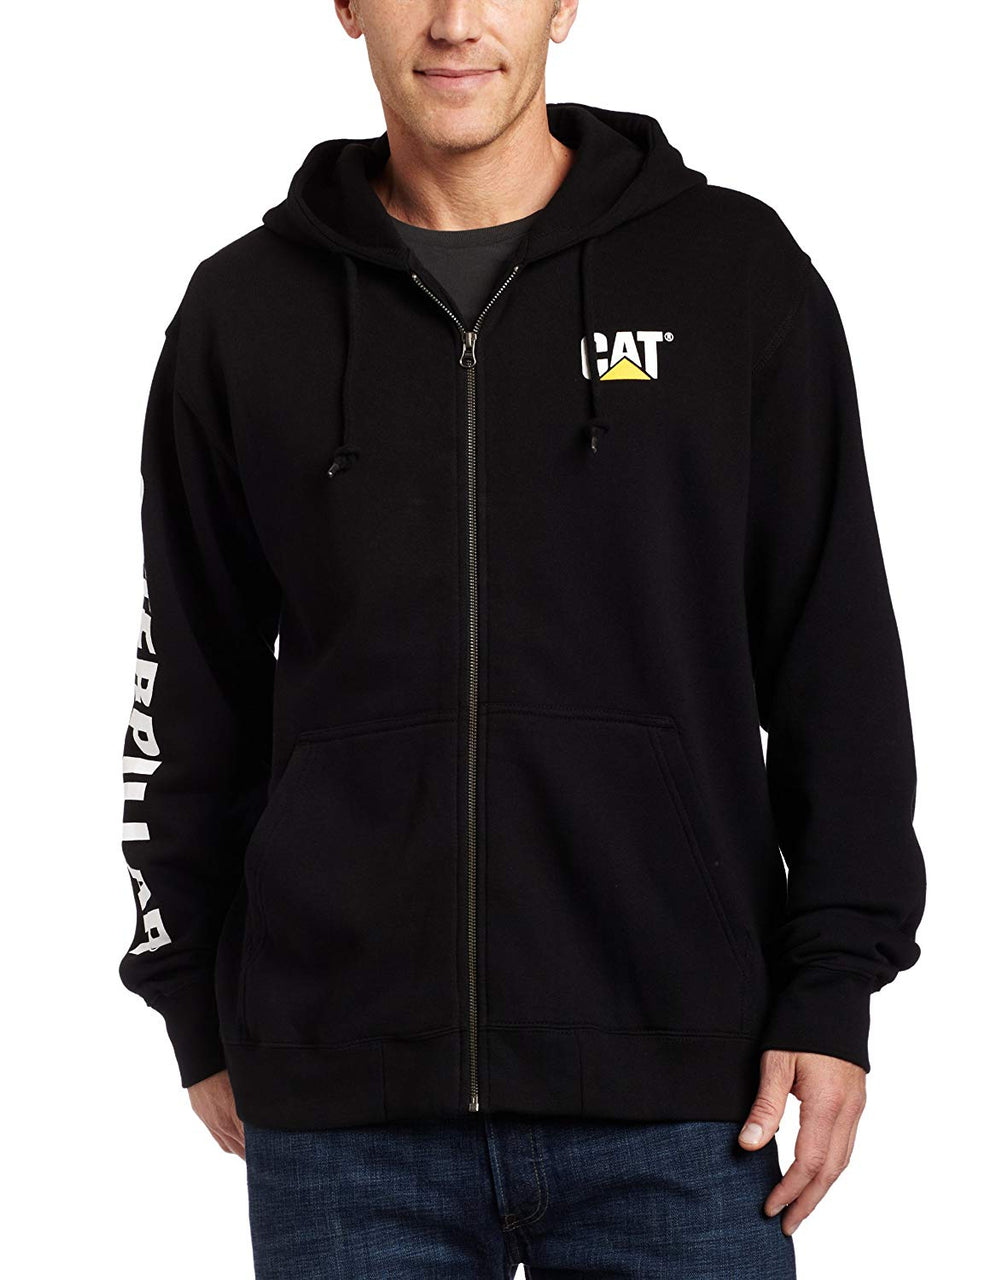 CAT W10840-016-XL Full Zip Hooded Sweatshirt, Black, Extra-Large ...